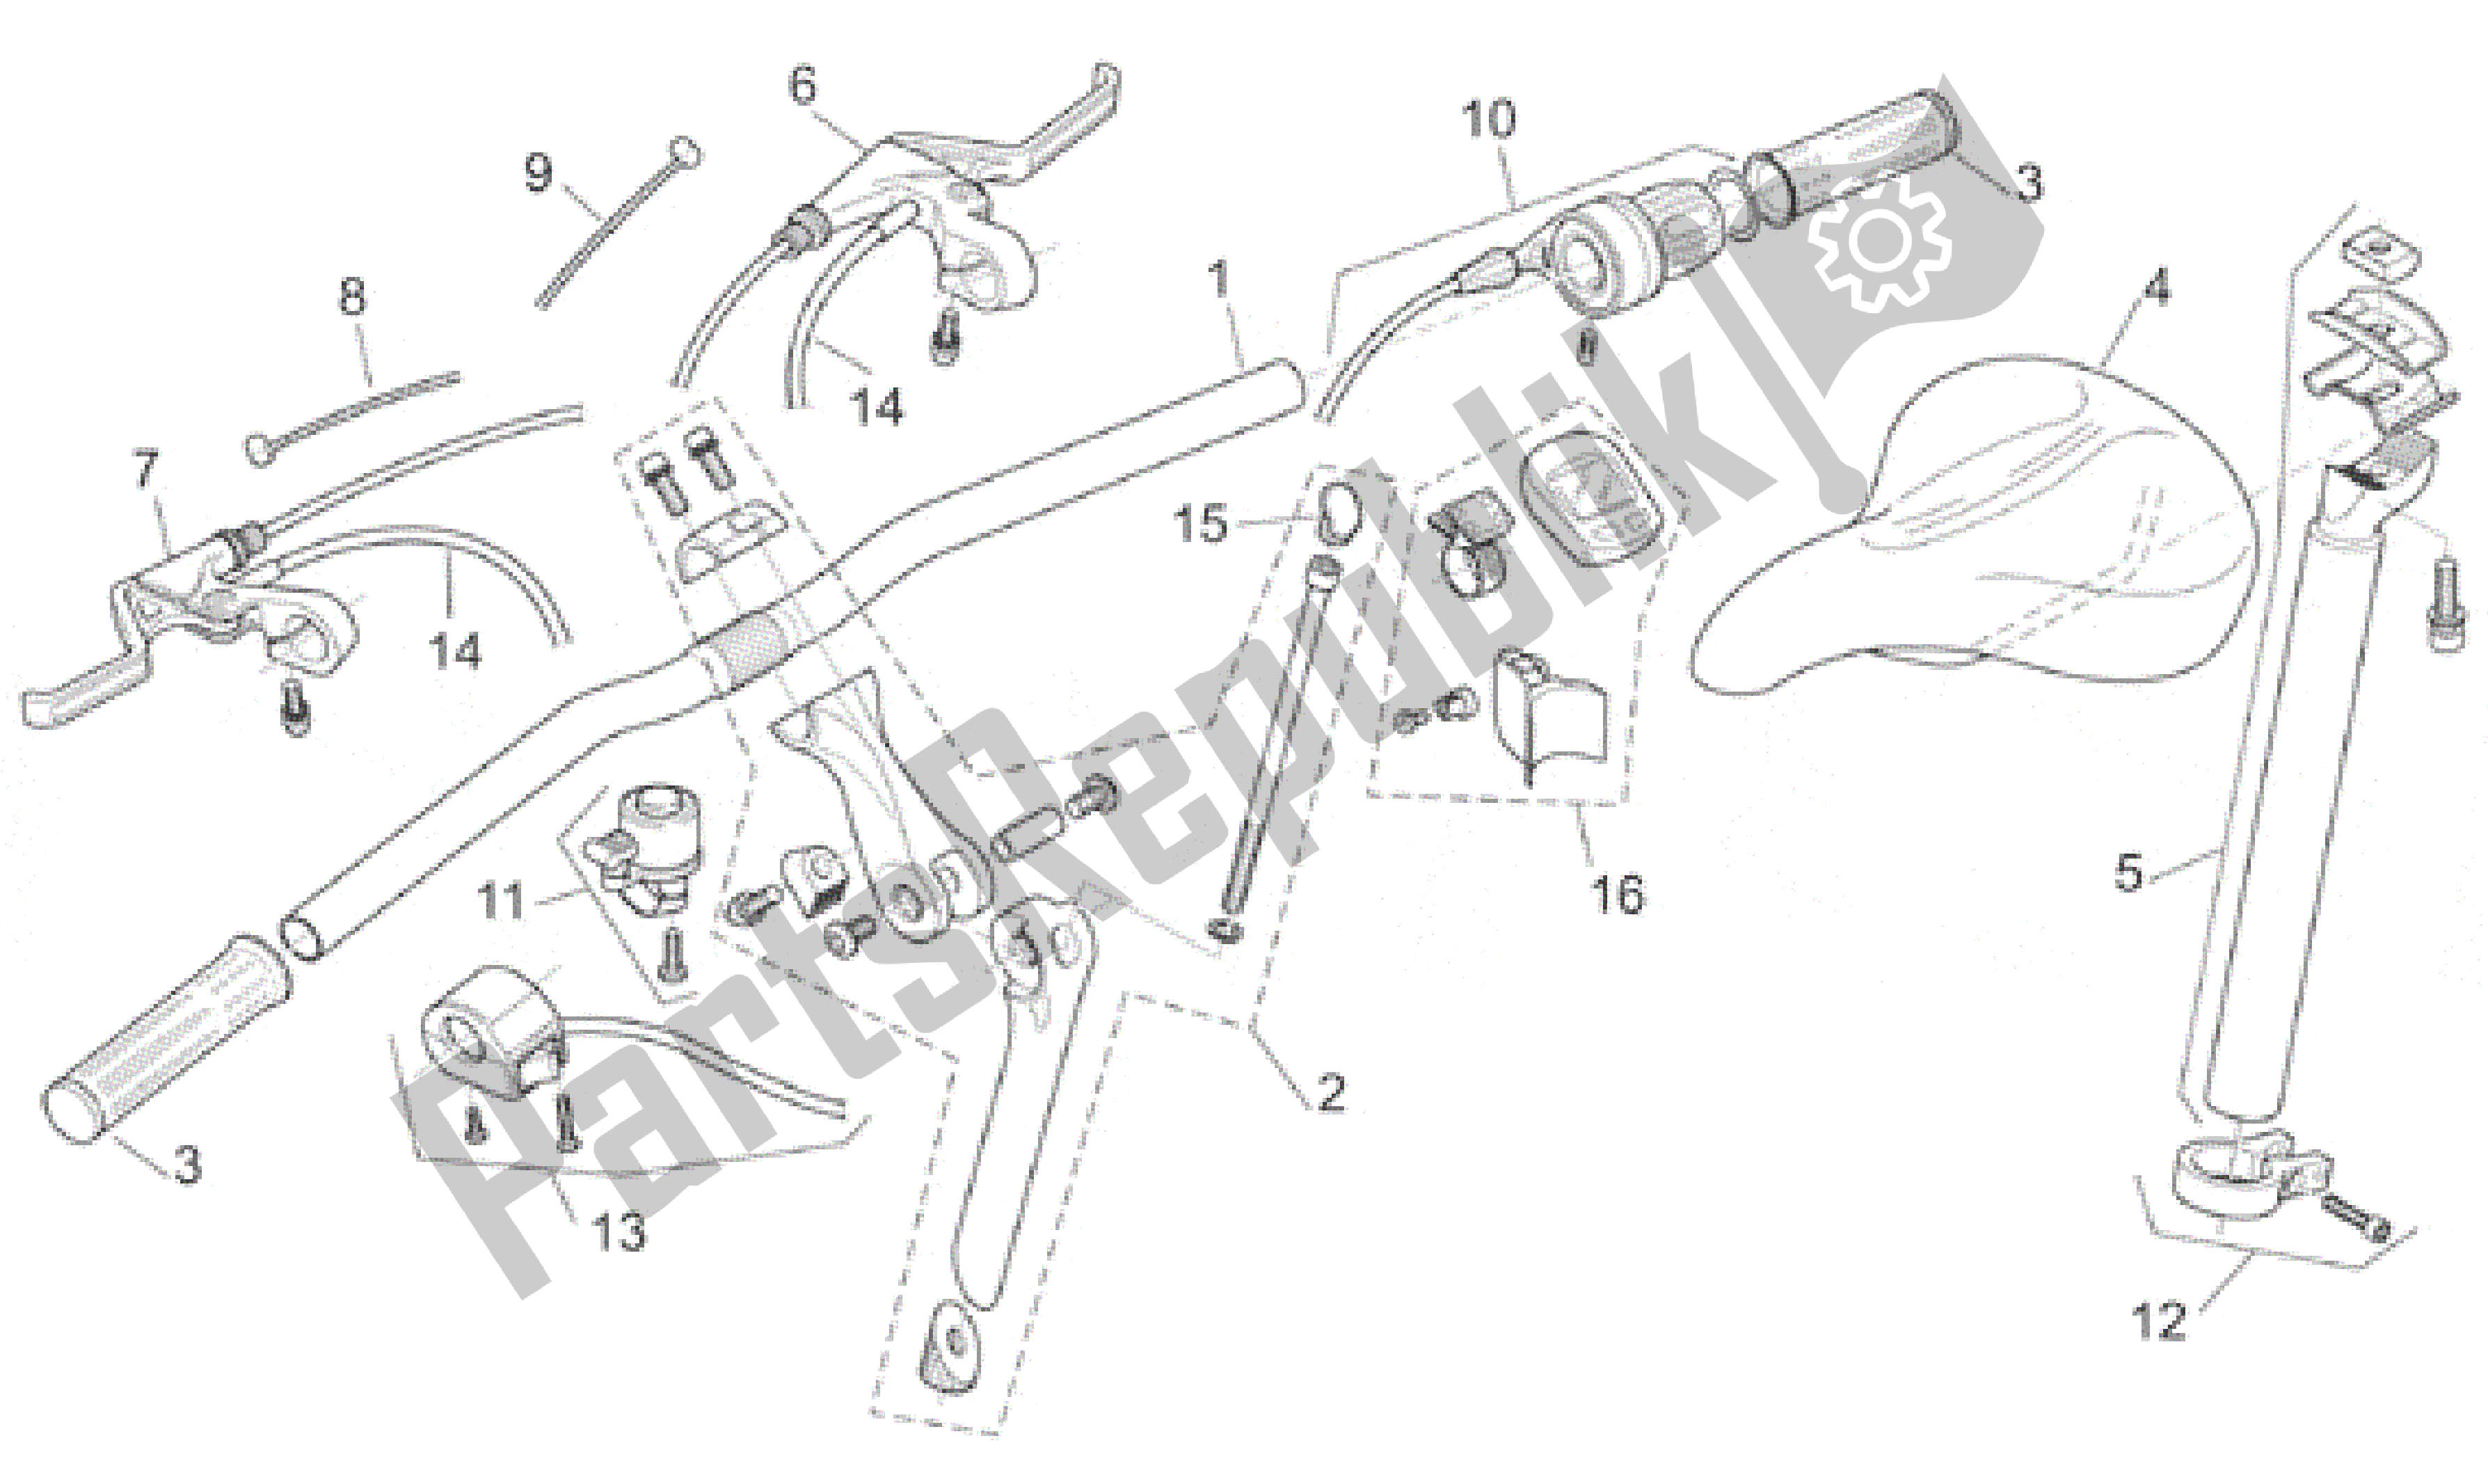 All parts for the Handlebar - Saddle of the Aprilia Bici Elettrica 0 2001